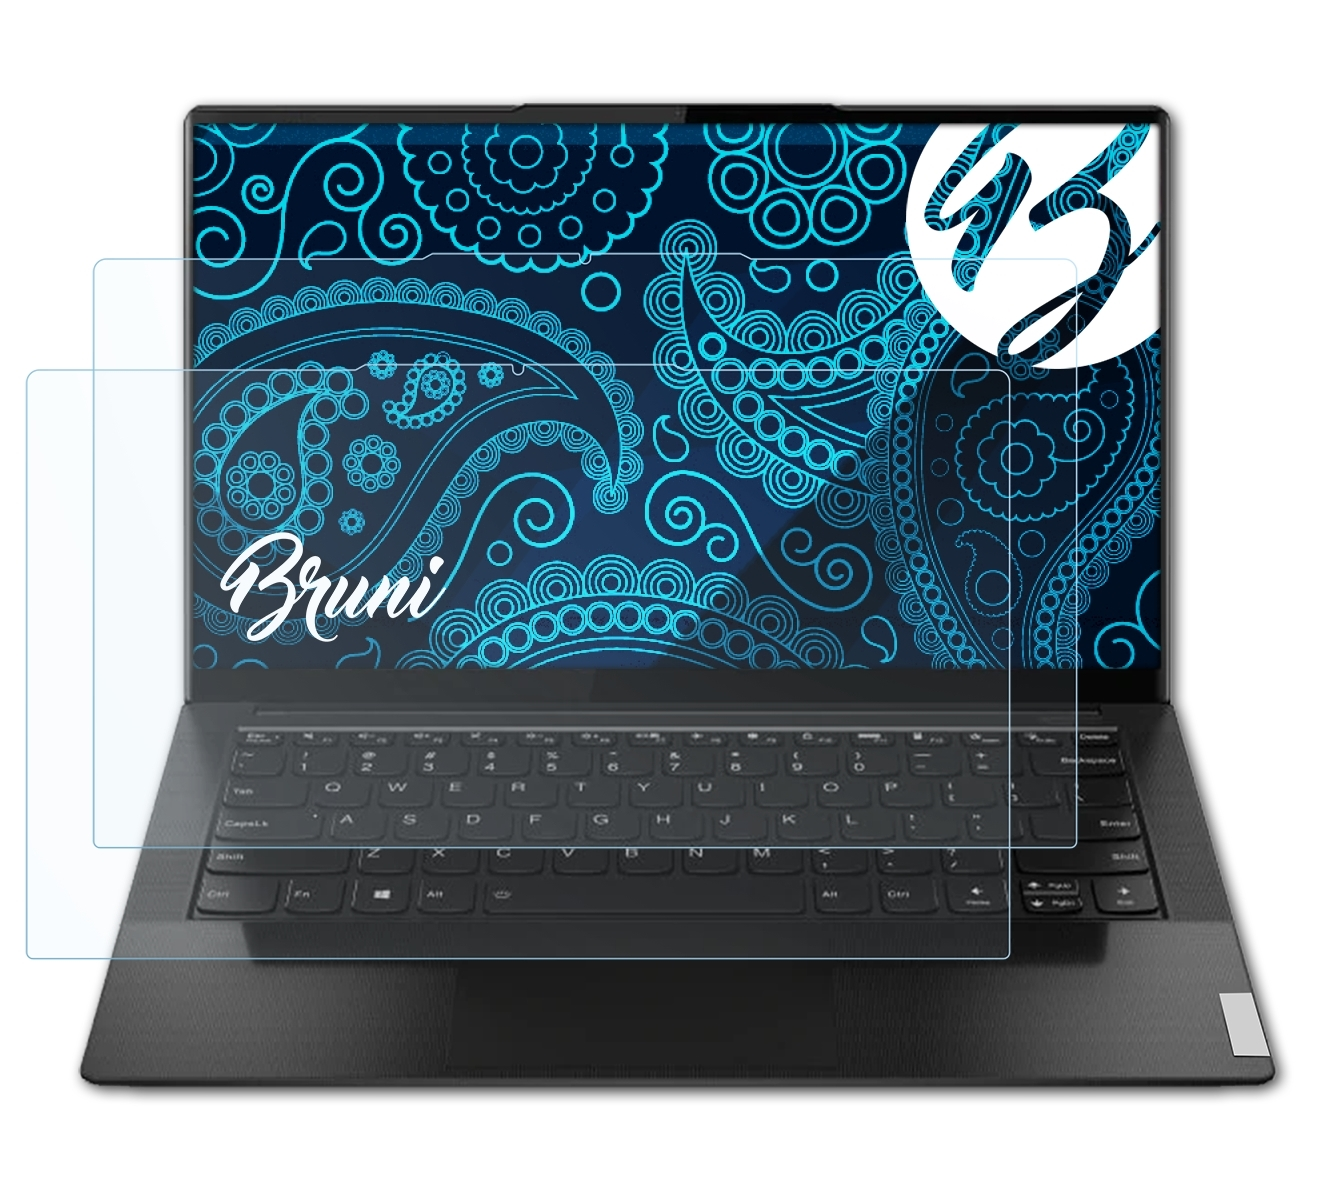 BRUNI 2x Basics-Clear Slim (14 9i Schutzfolie(für Yoga Lenovo inch))